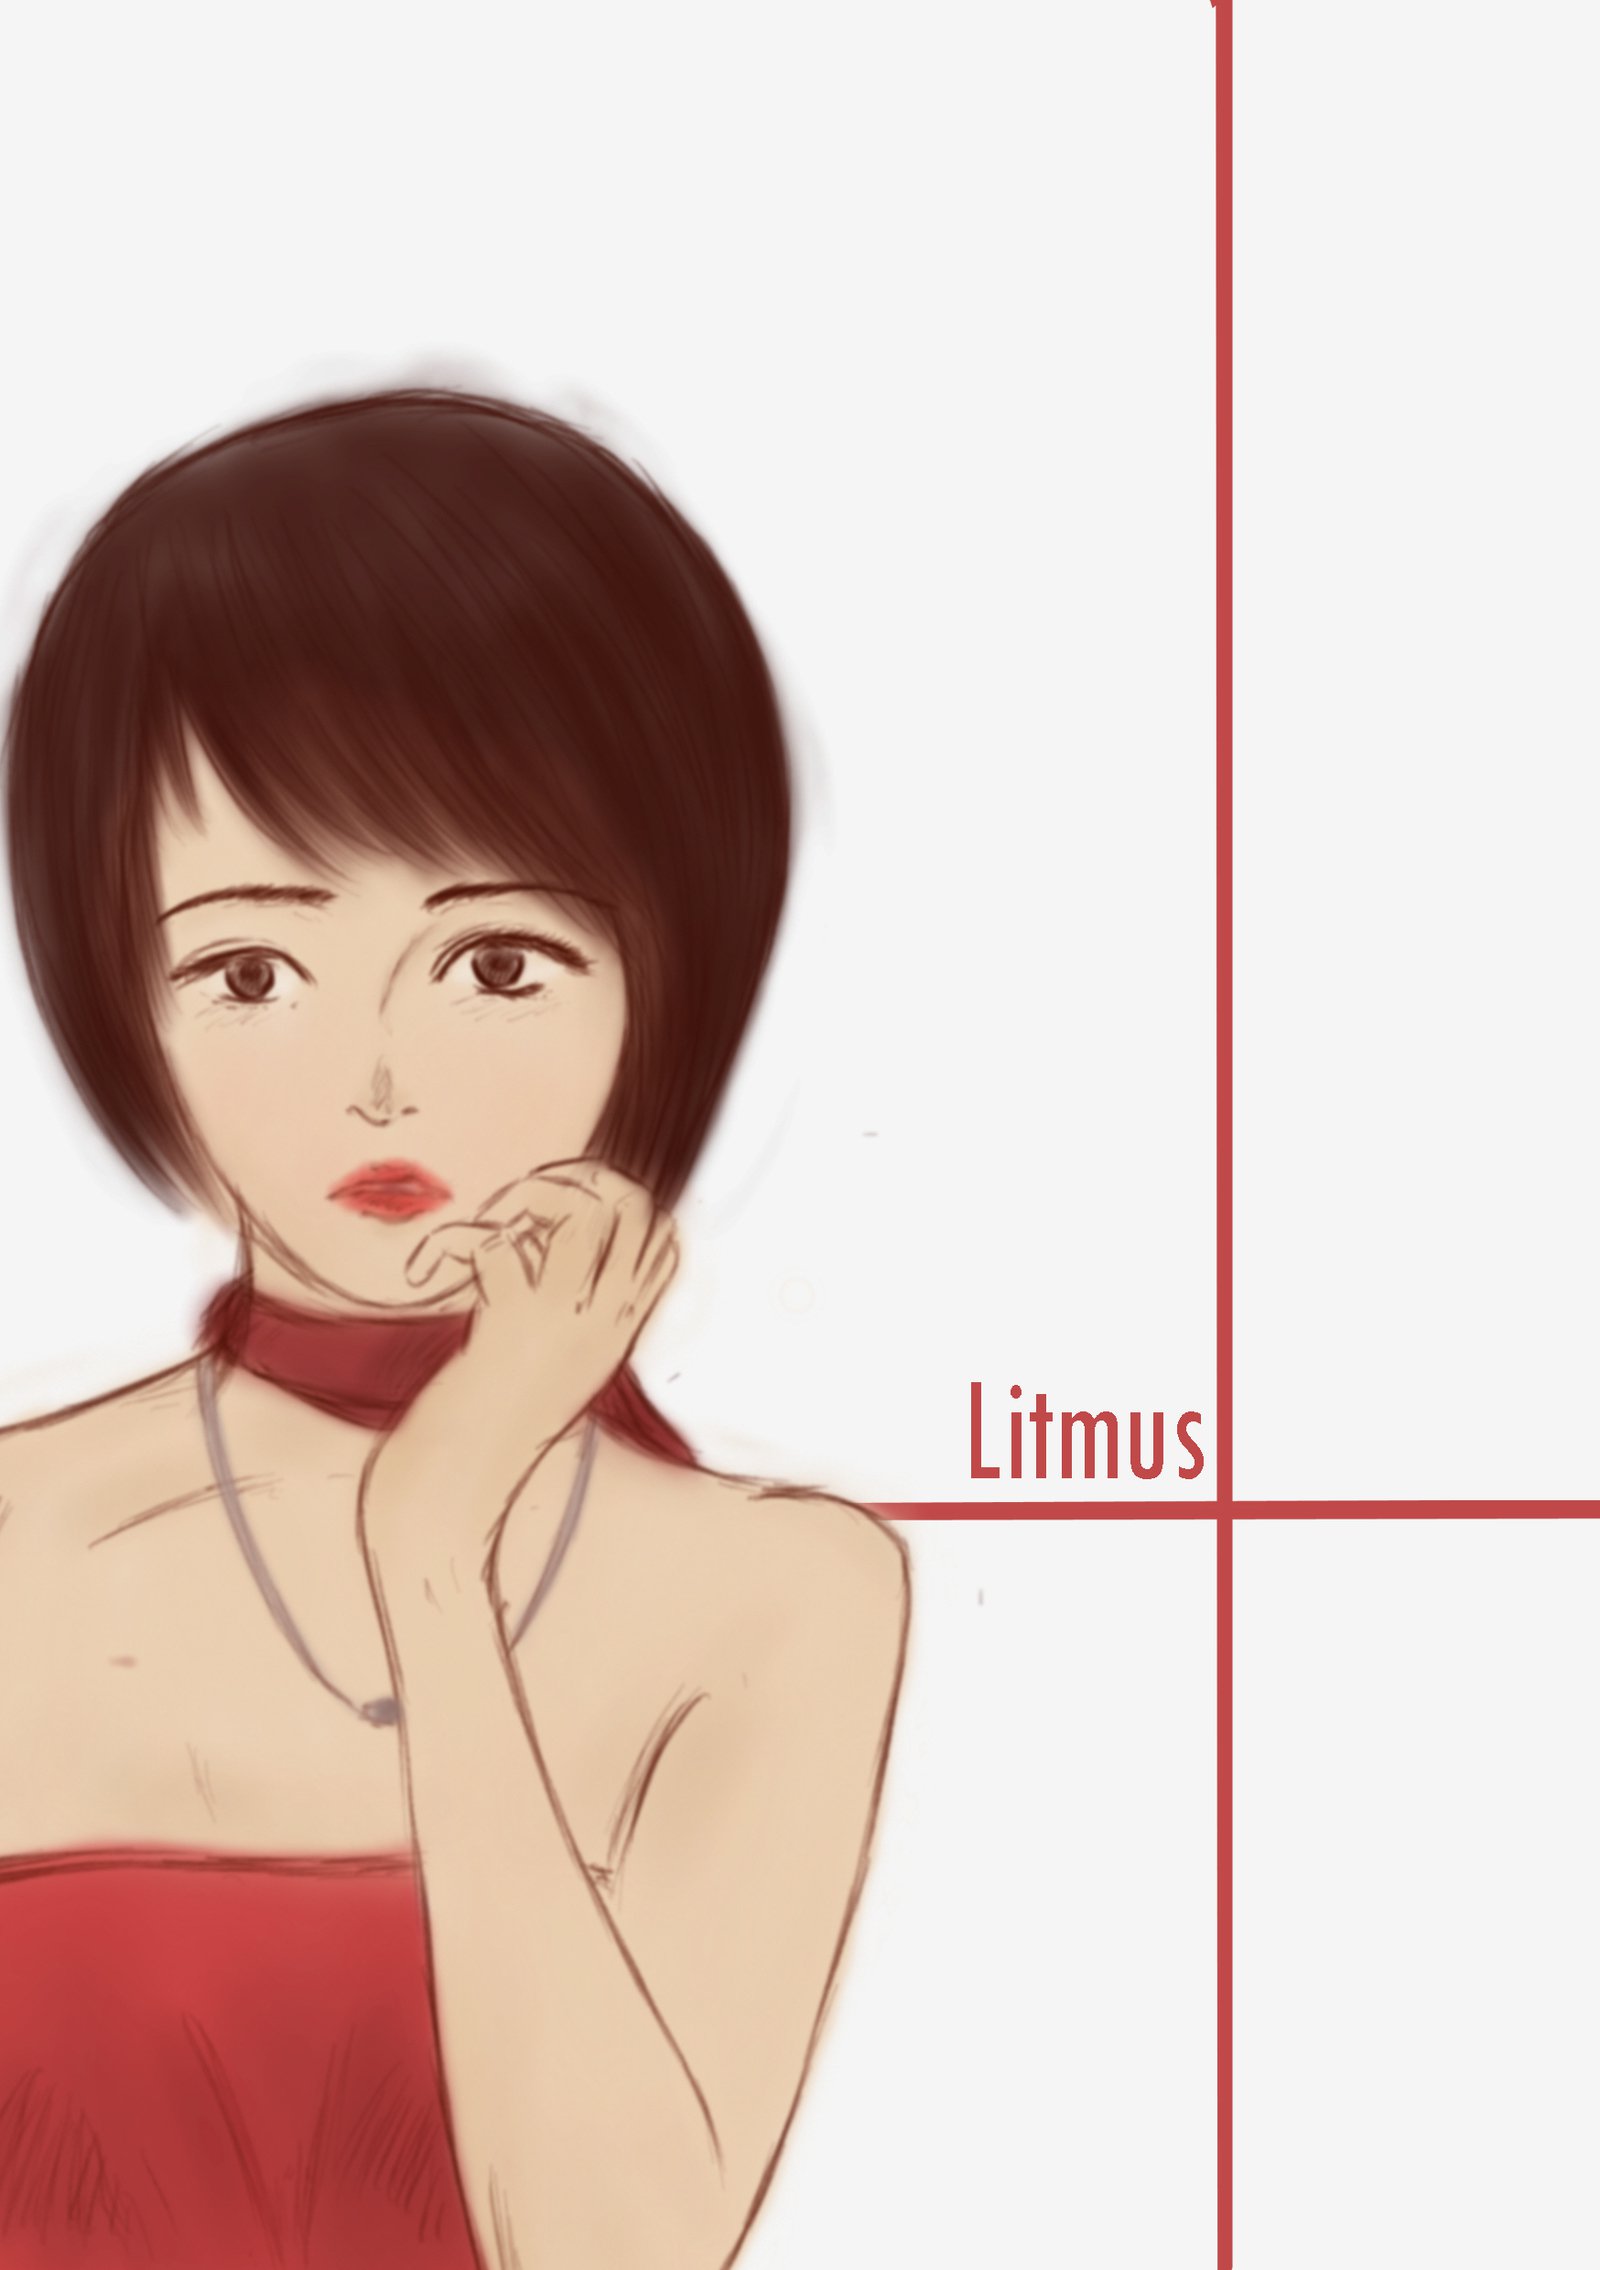 Litmus_ [Japaness_Japanese）